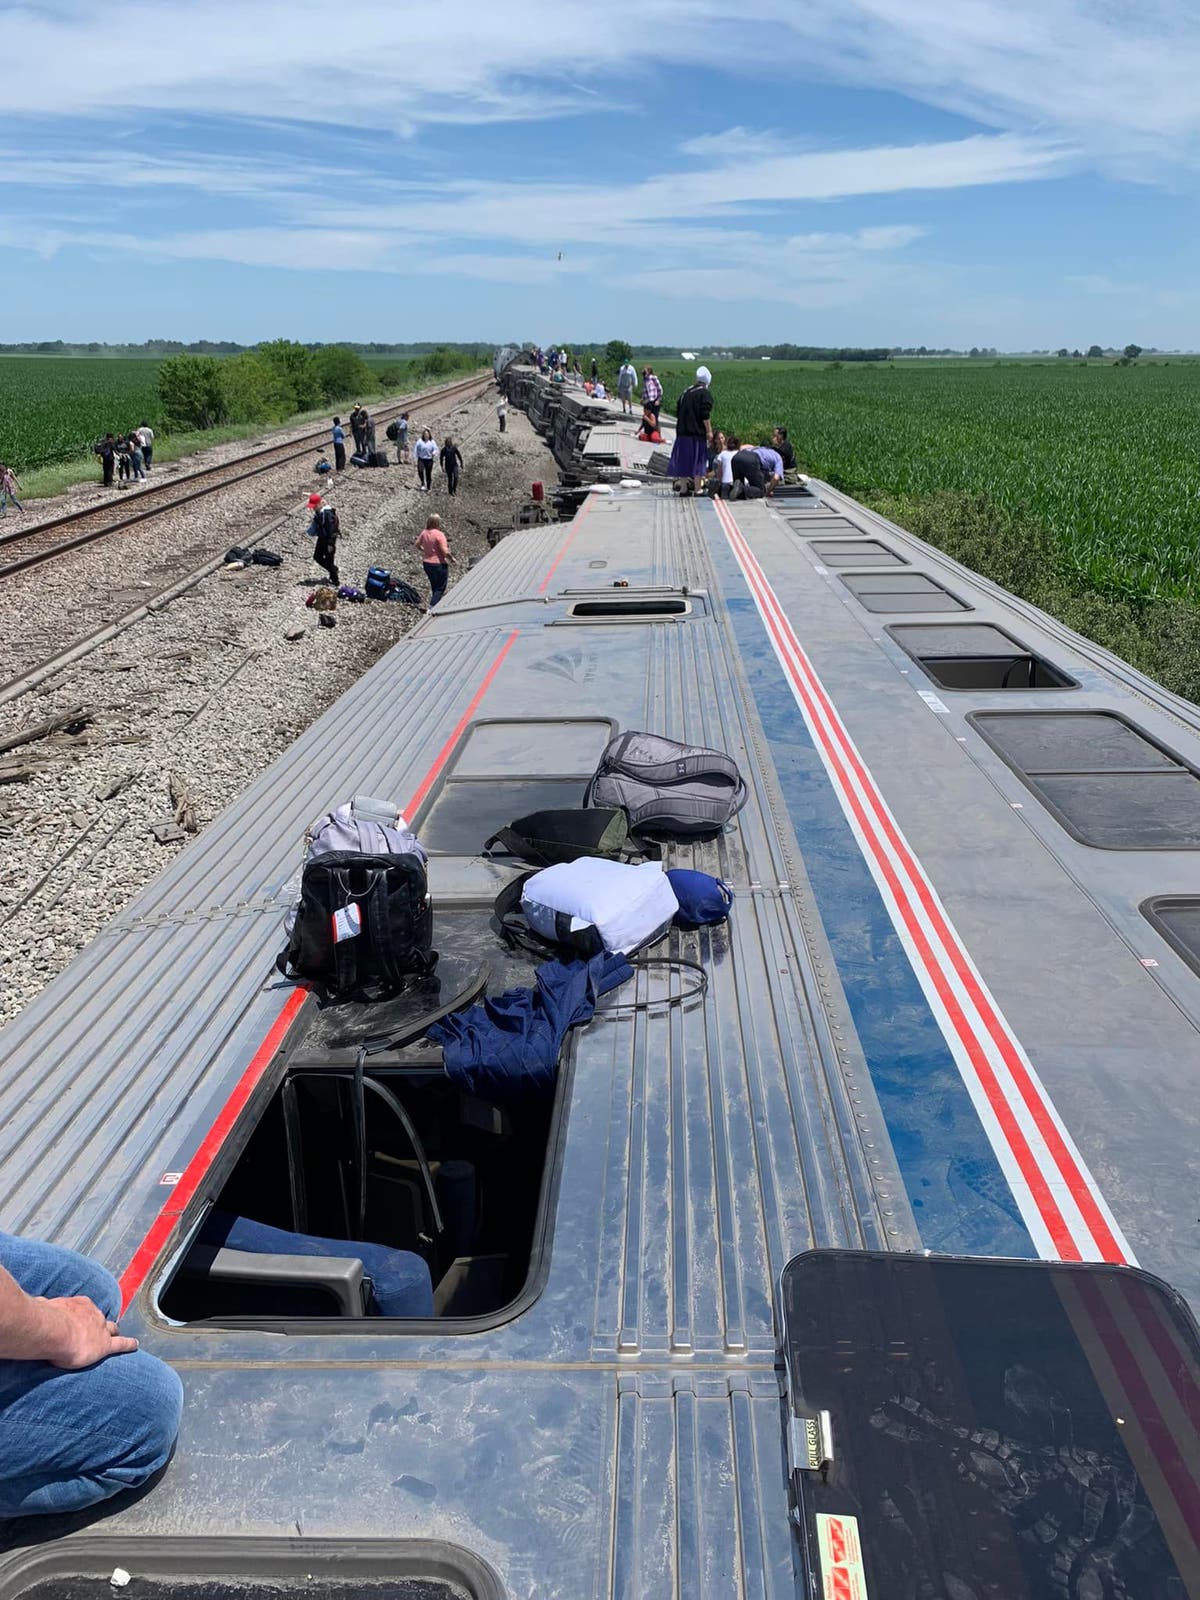 Hero teacher on first Amtrak trip helps save passengers in ‘chaos’ of Missouri crash